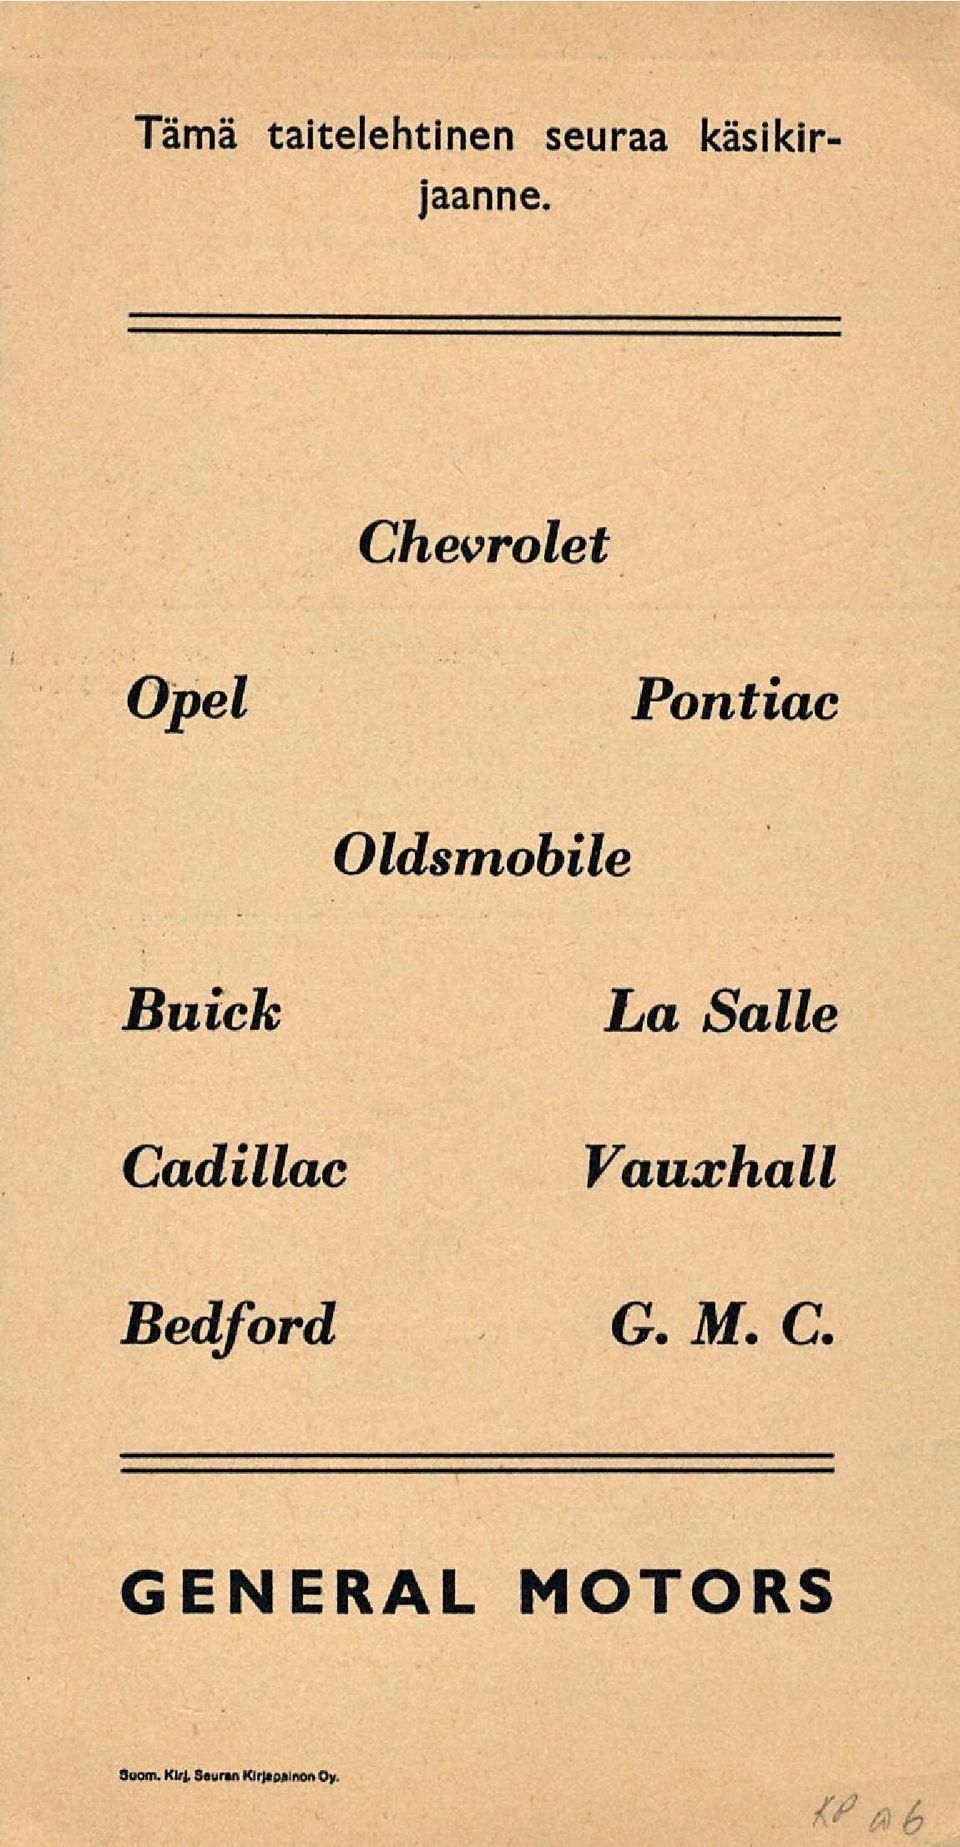 Cadillac La Salle Vauxhall Bedford G. M. C.